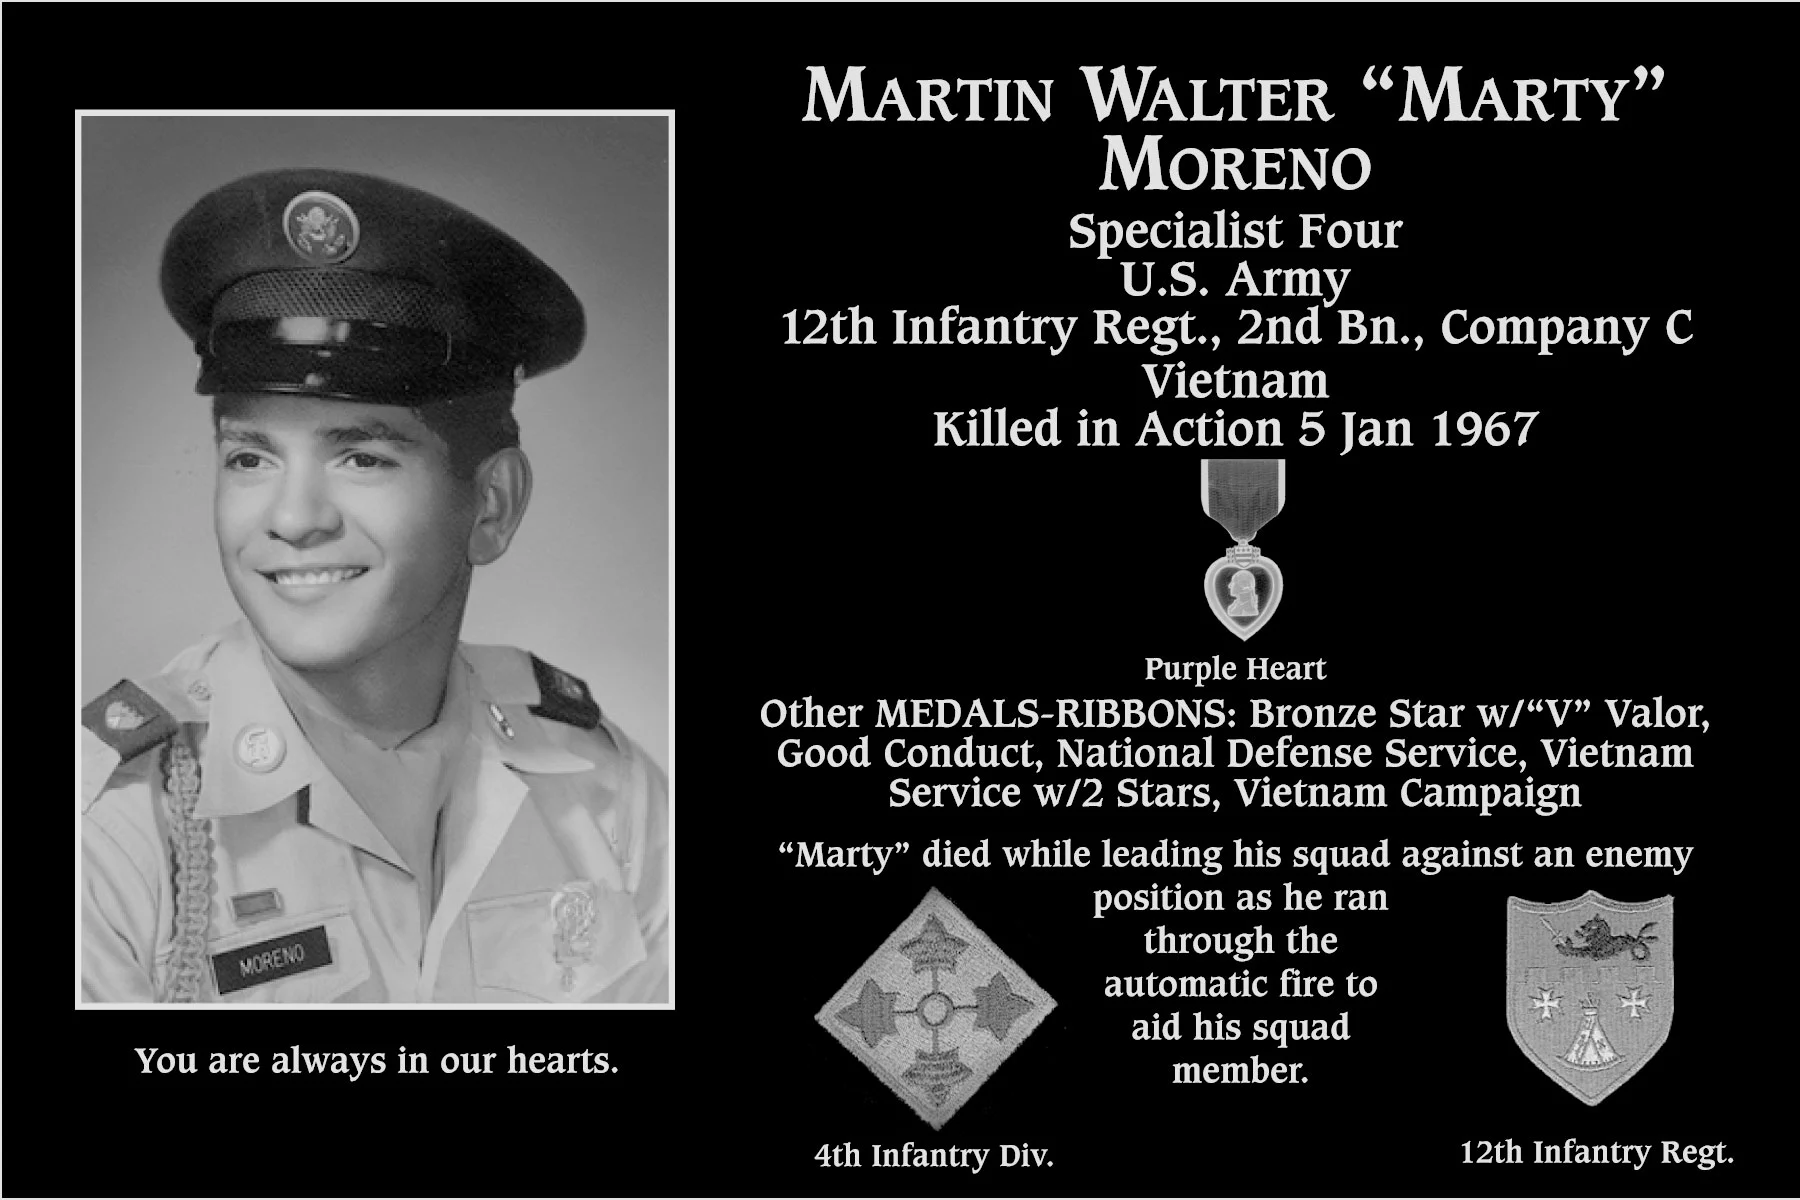 Martin Walter “Marty” Moreno